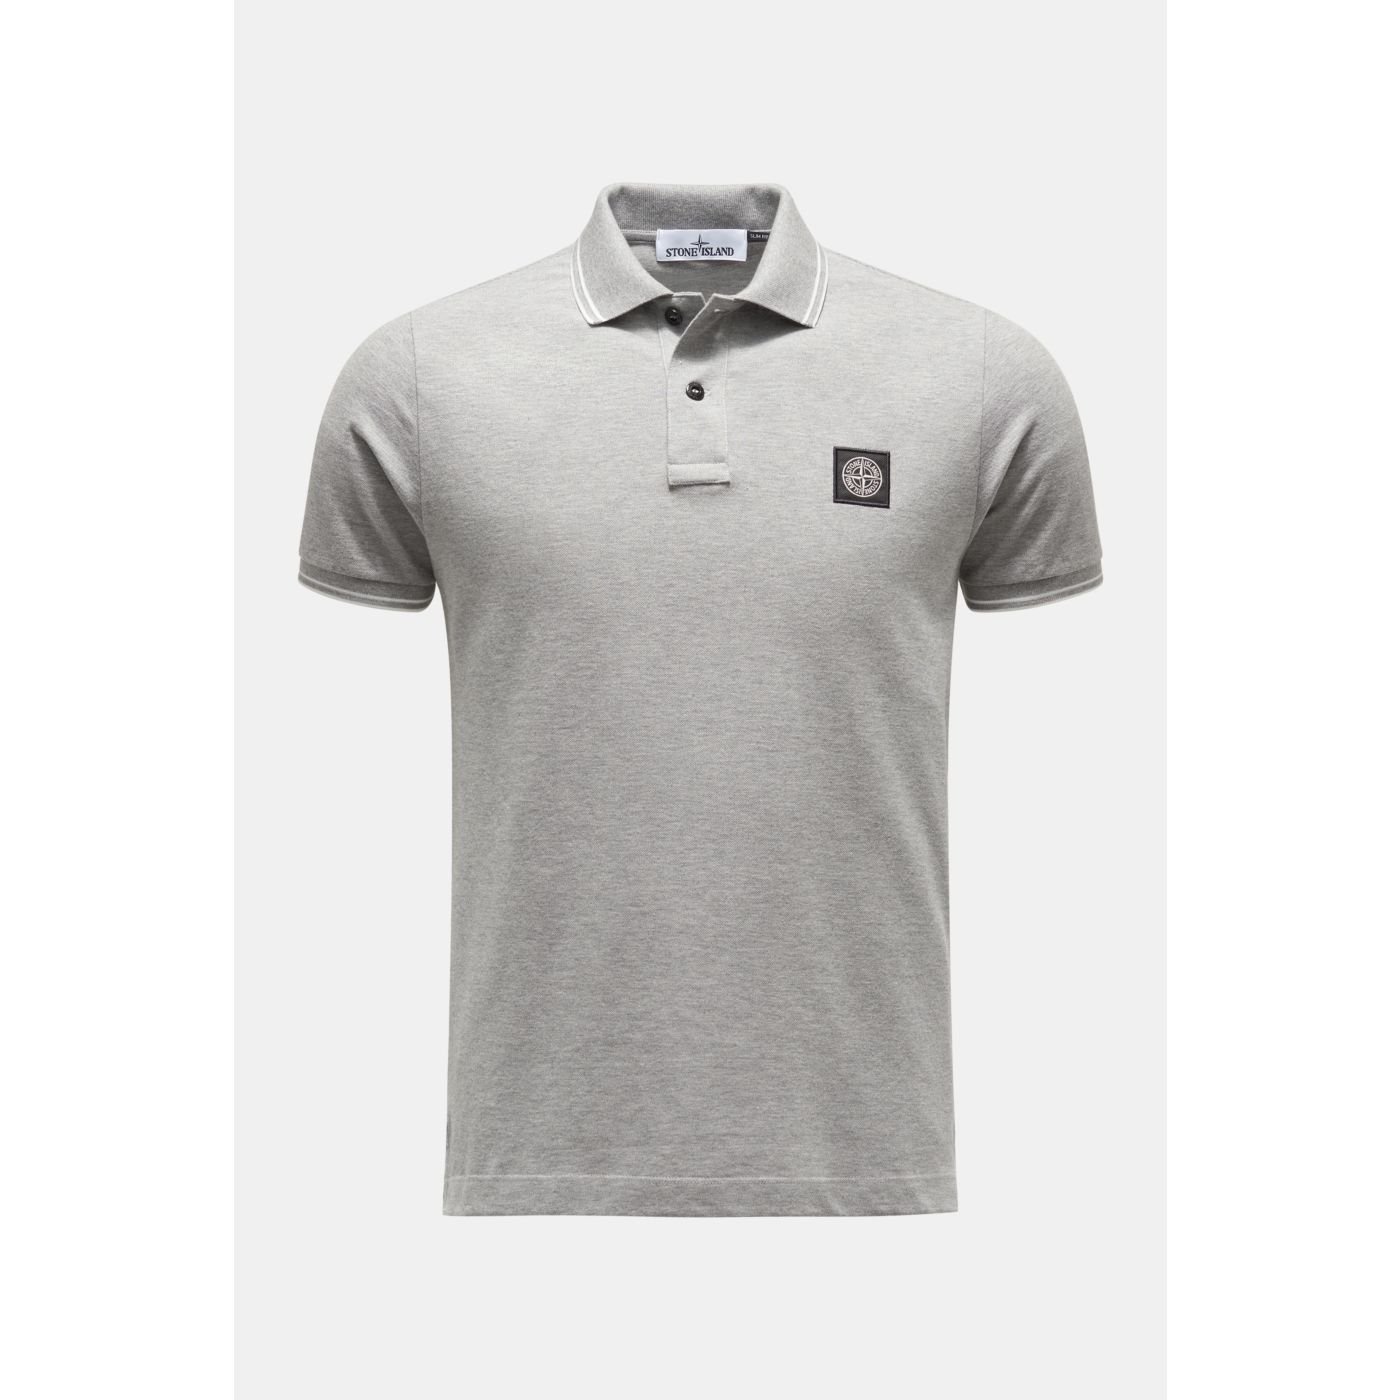 stone island polo shirt grey